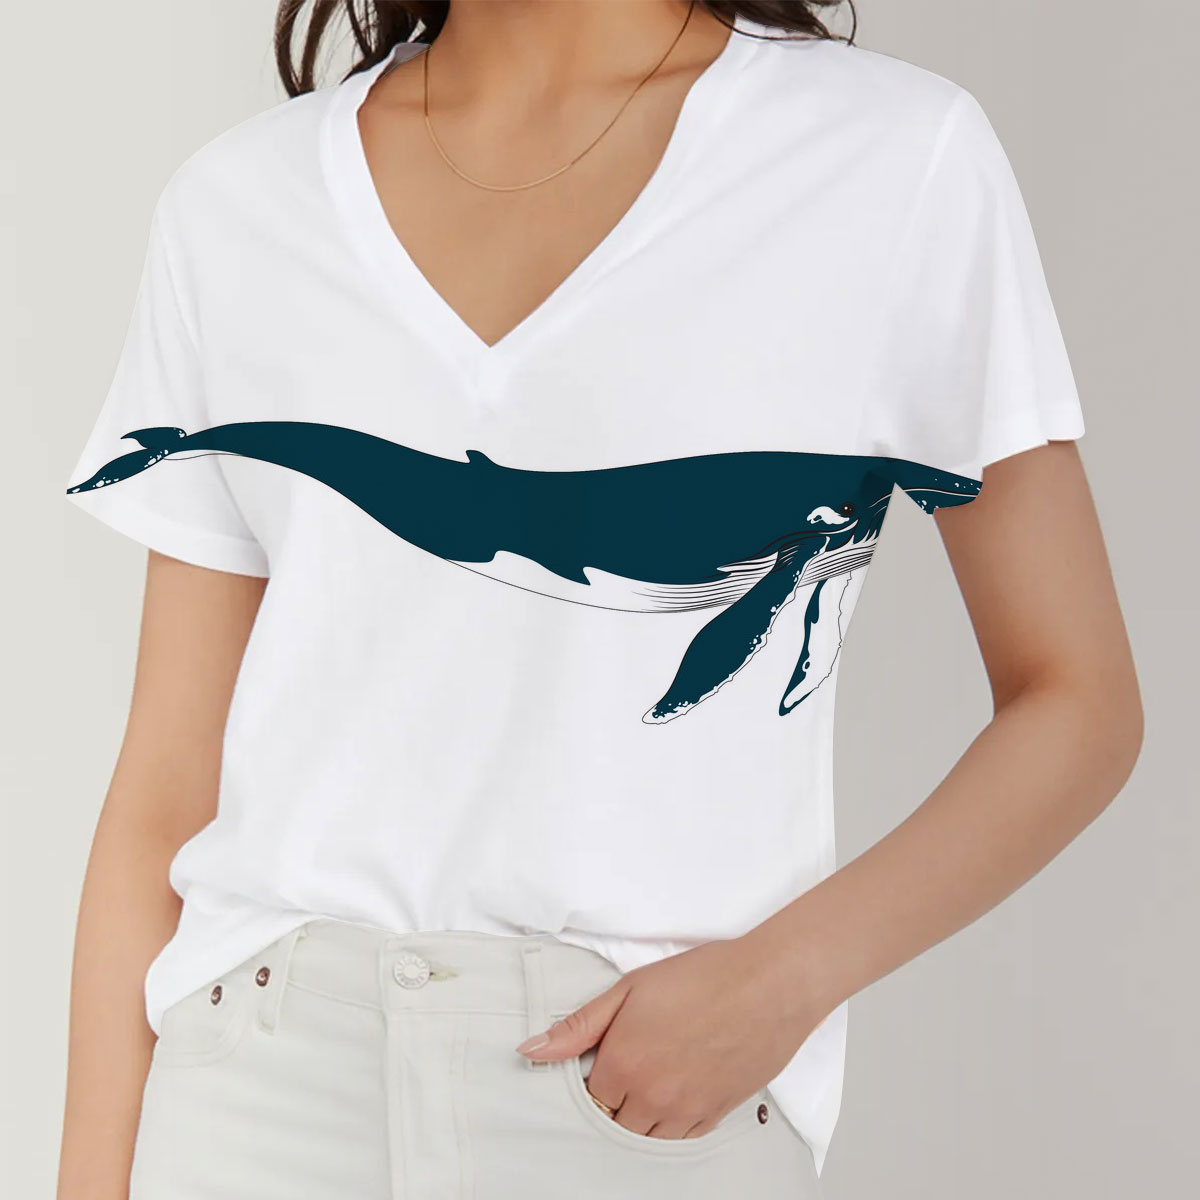 Beautiful Blue Whale V-Neck Women's T-Shirt